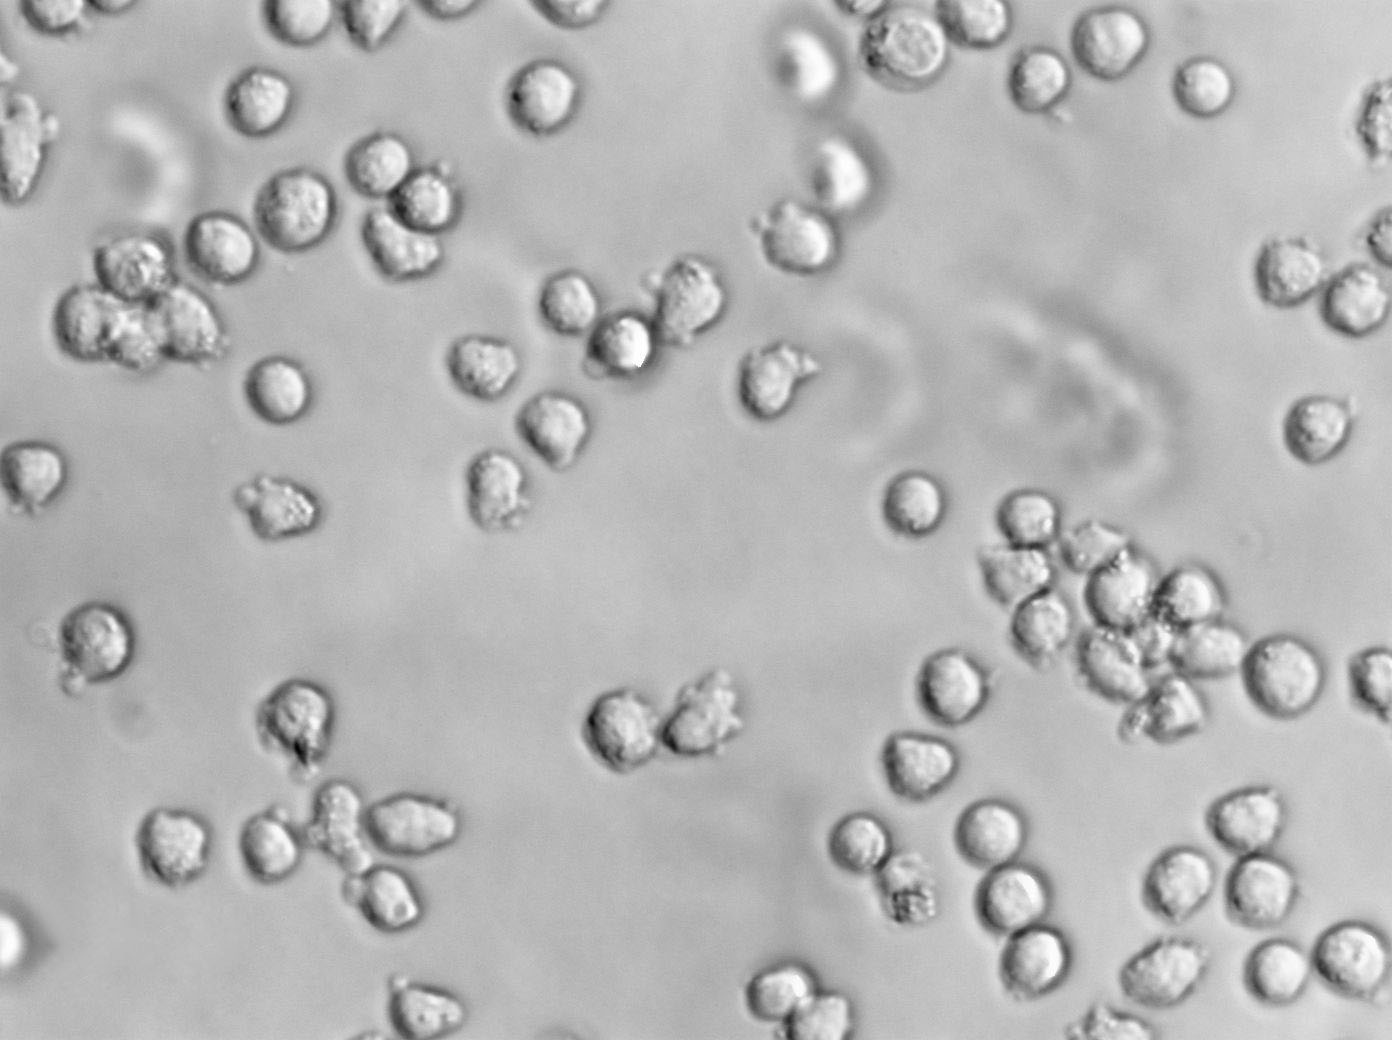 JOSK-M Cell|人急性单核细胞白血病细胞